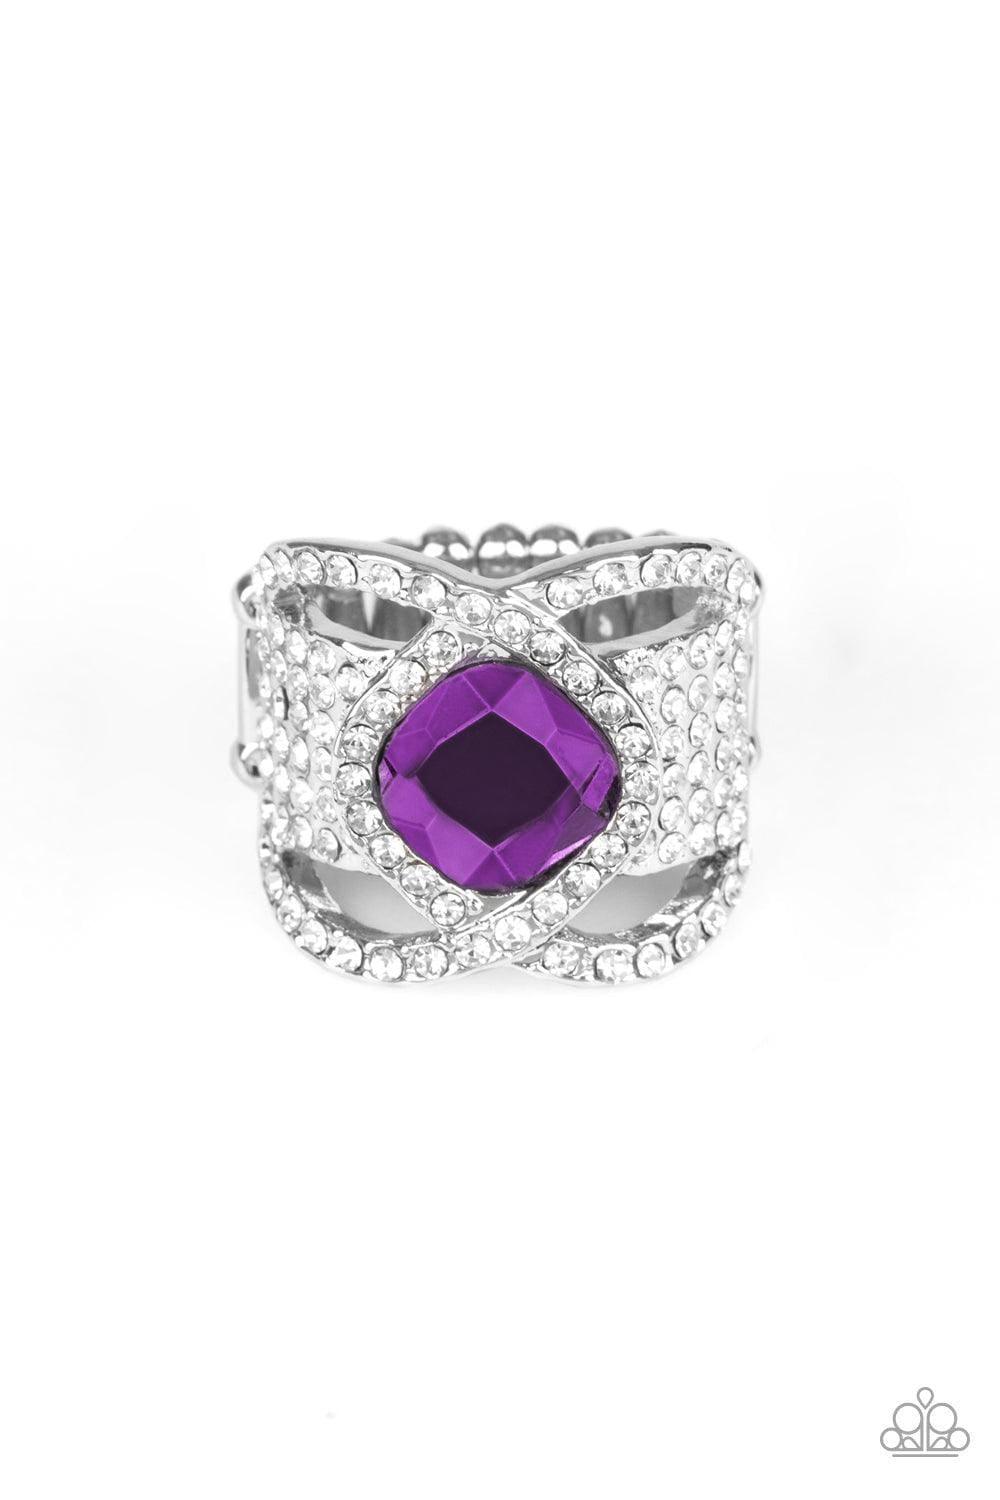 Paparazzi Accessories - Triple Crown Twinkle - Purple Ring - Bling by JessieK